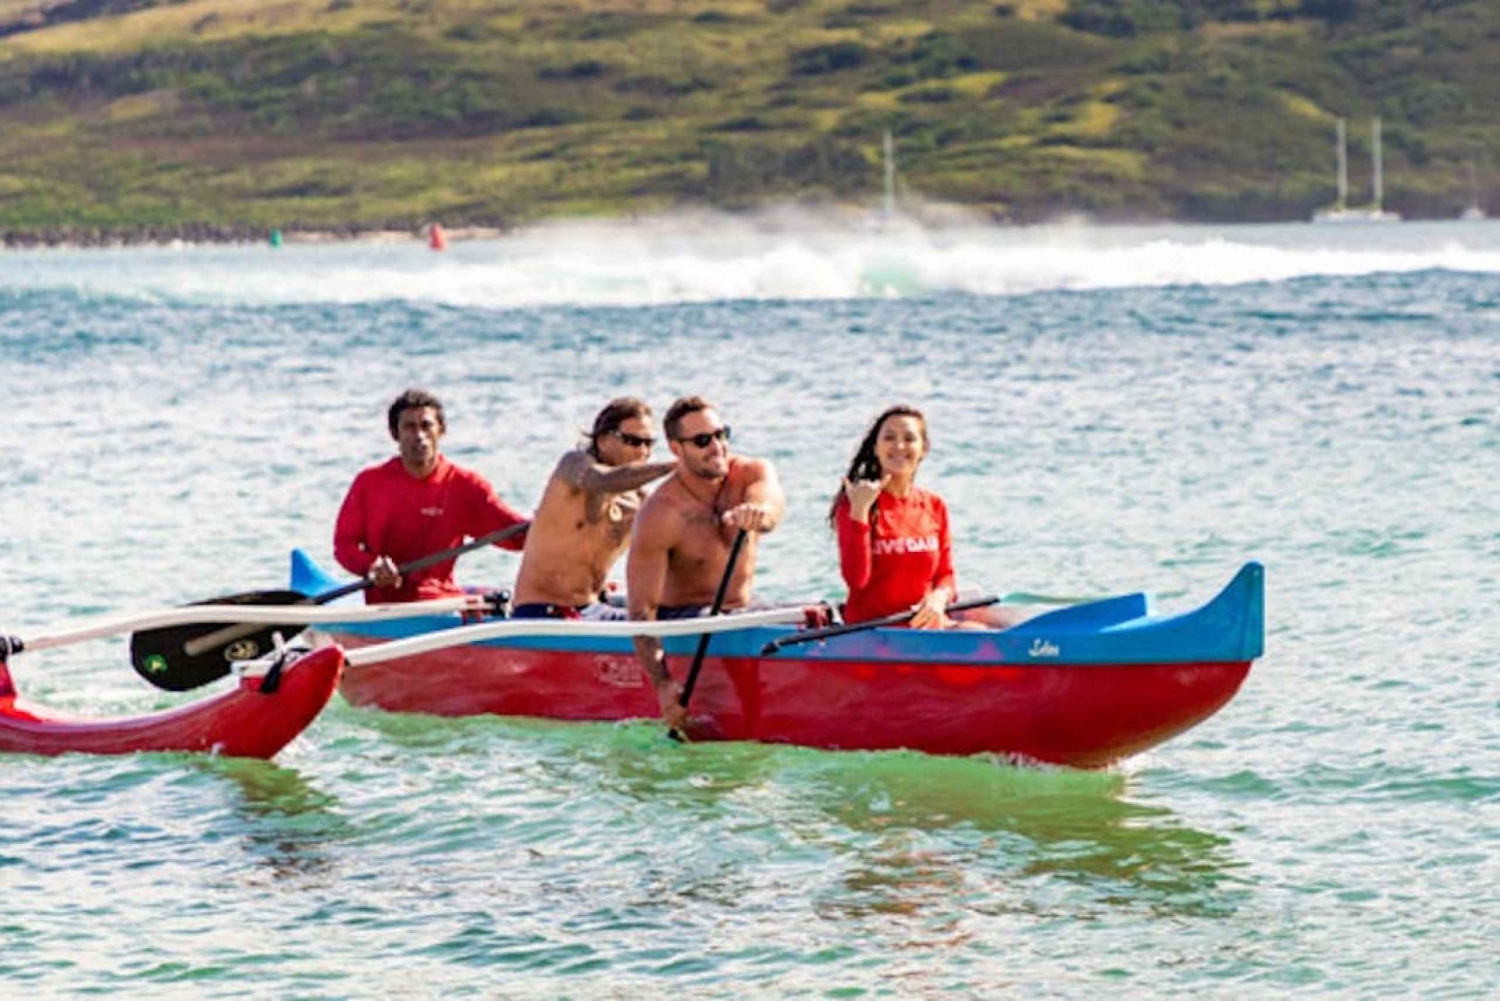 Kauai: Outrigger Canoe Ride